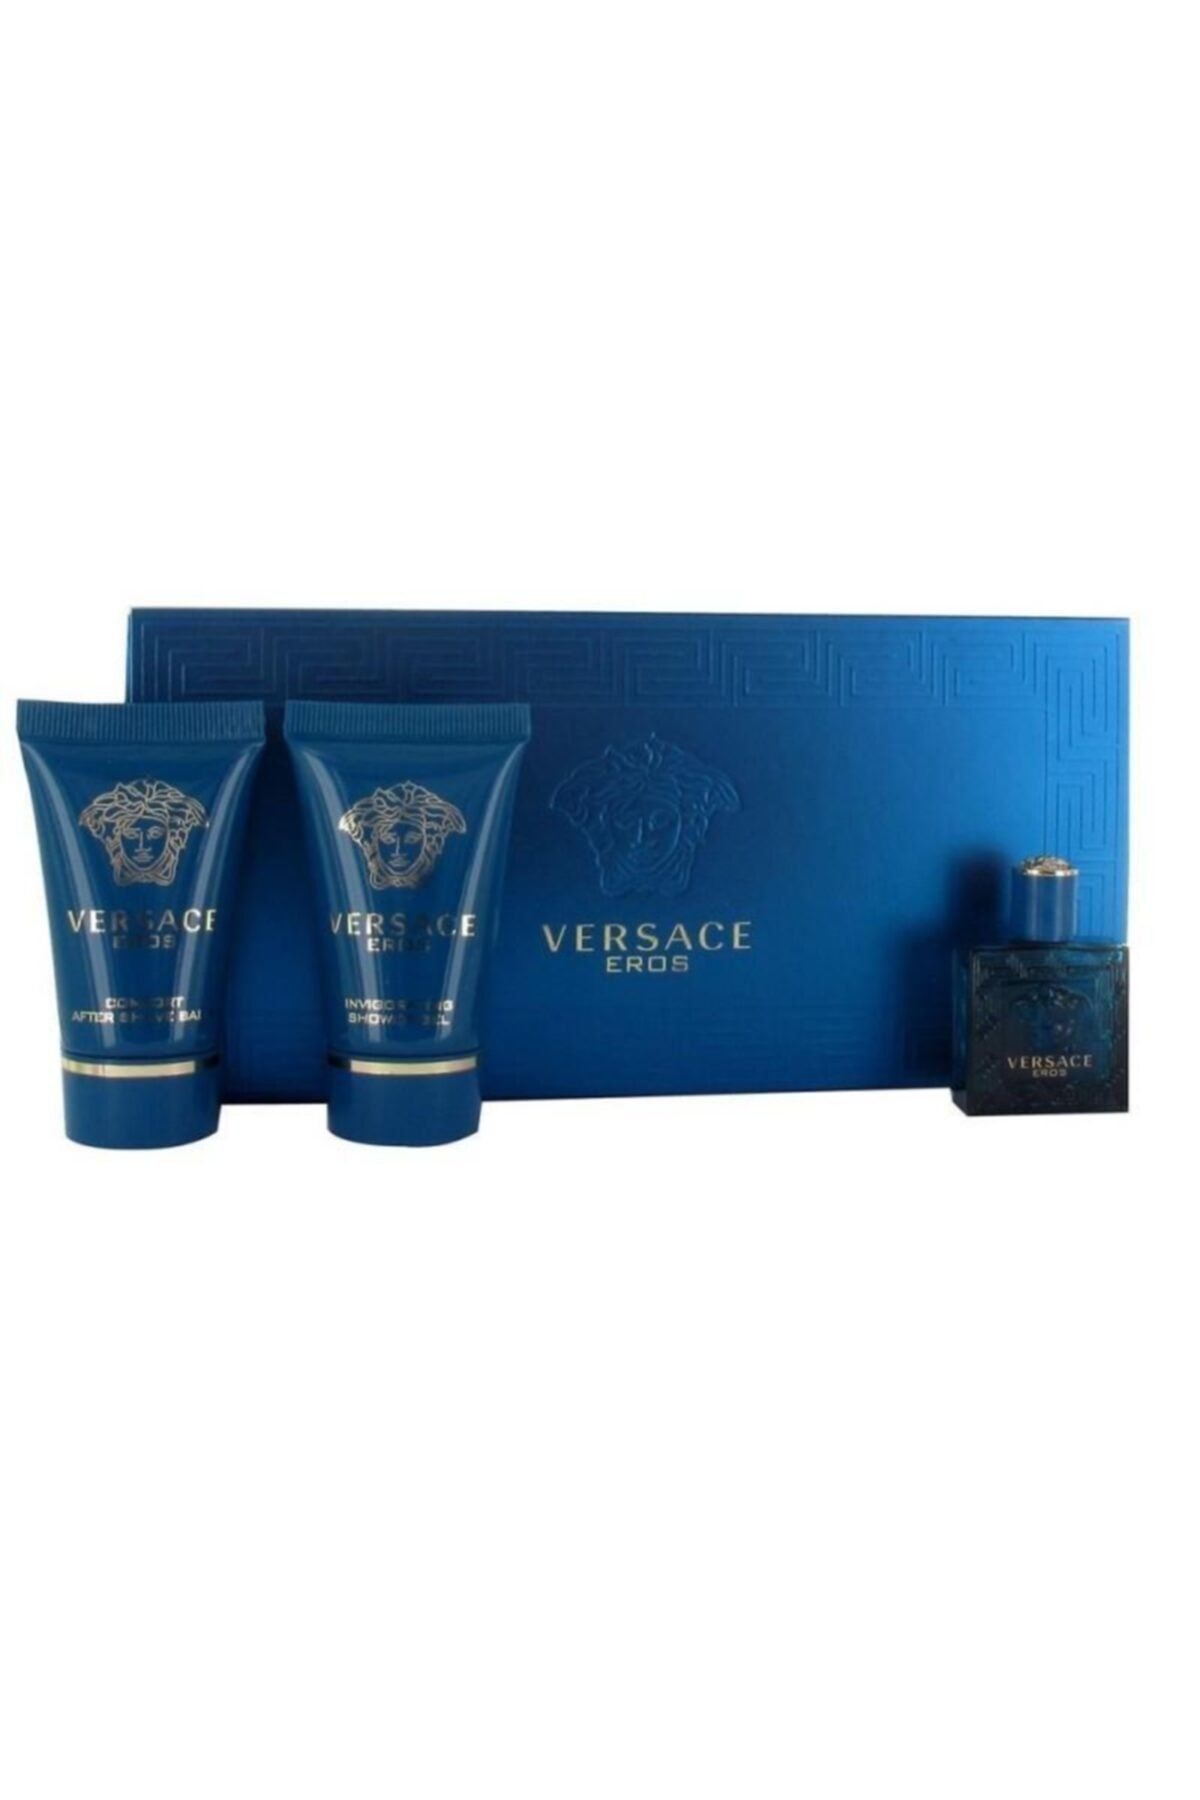 Versace Eros Edt 5 ml Erkek Parfüm Set 8011003810185